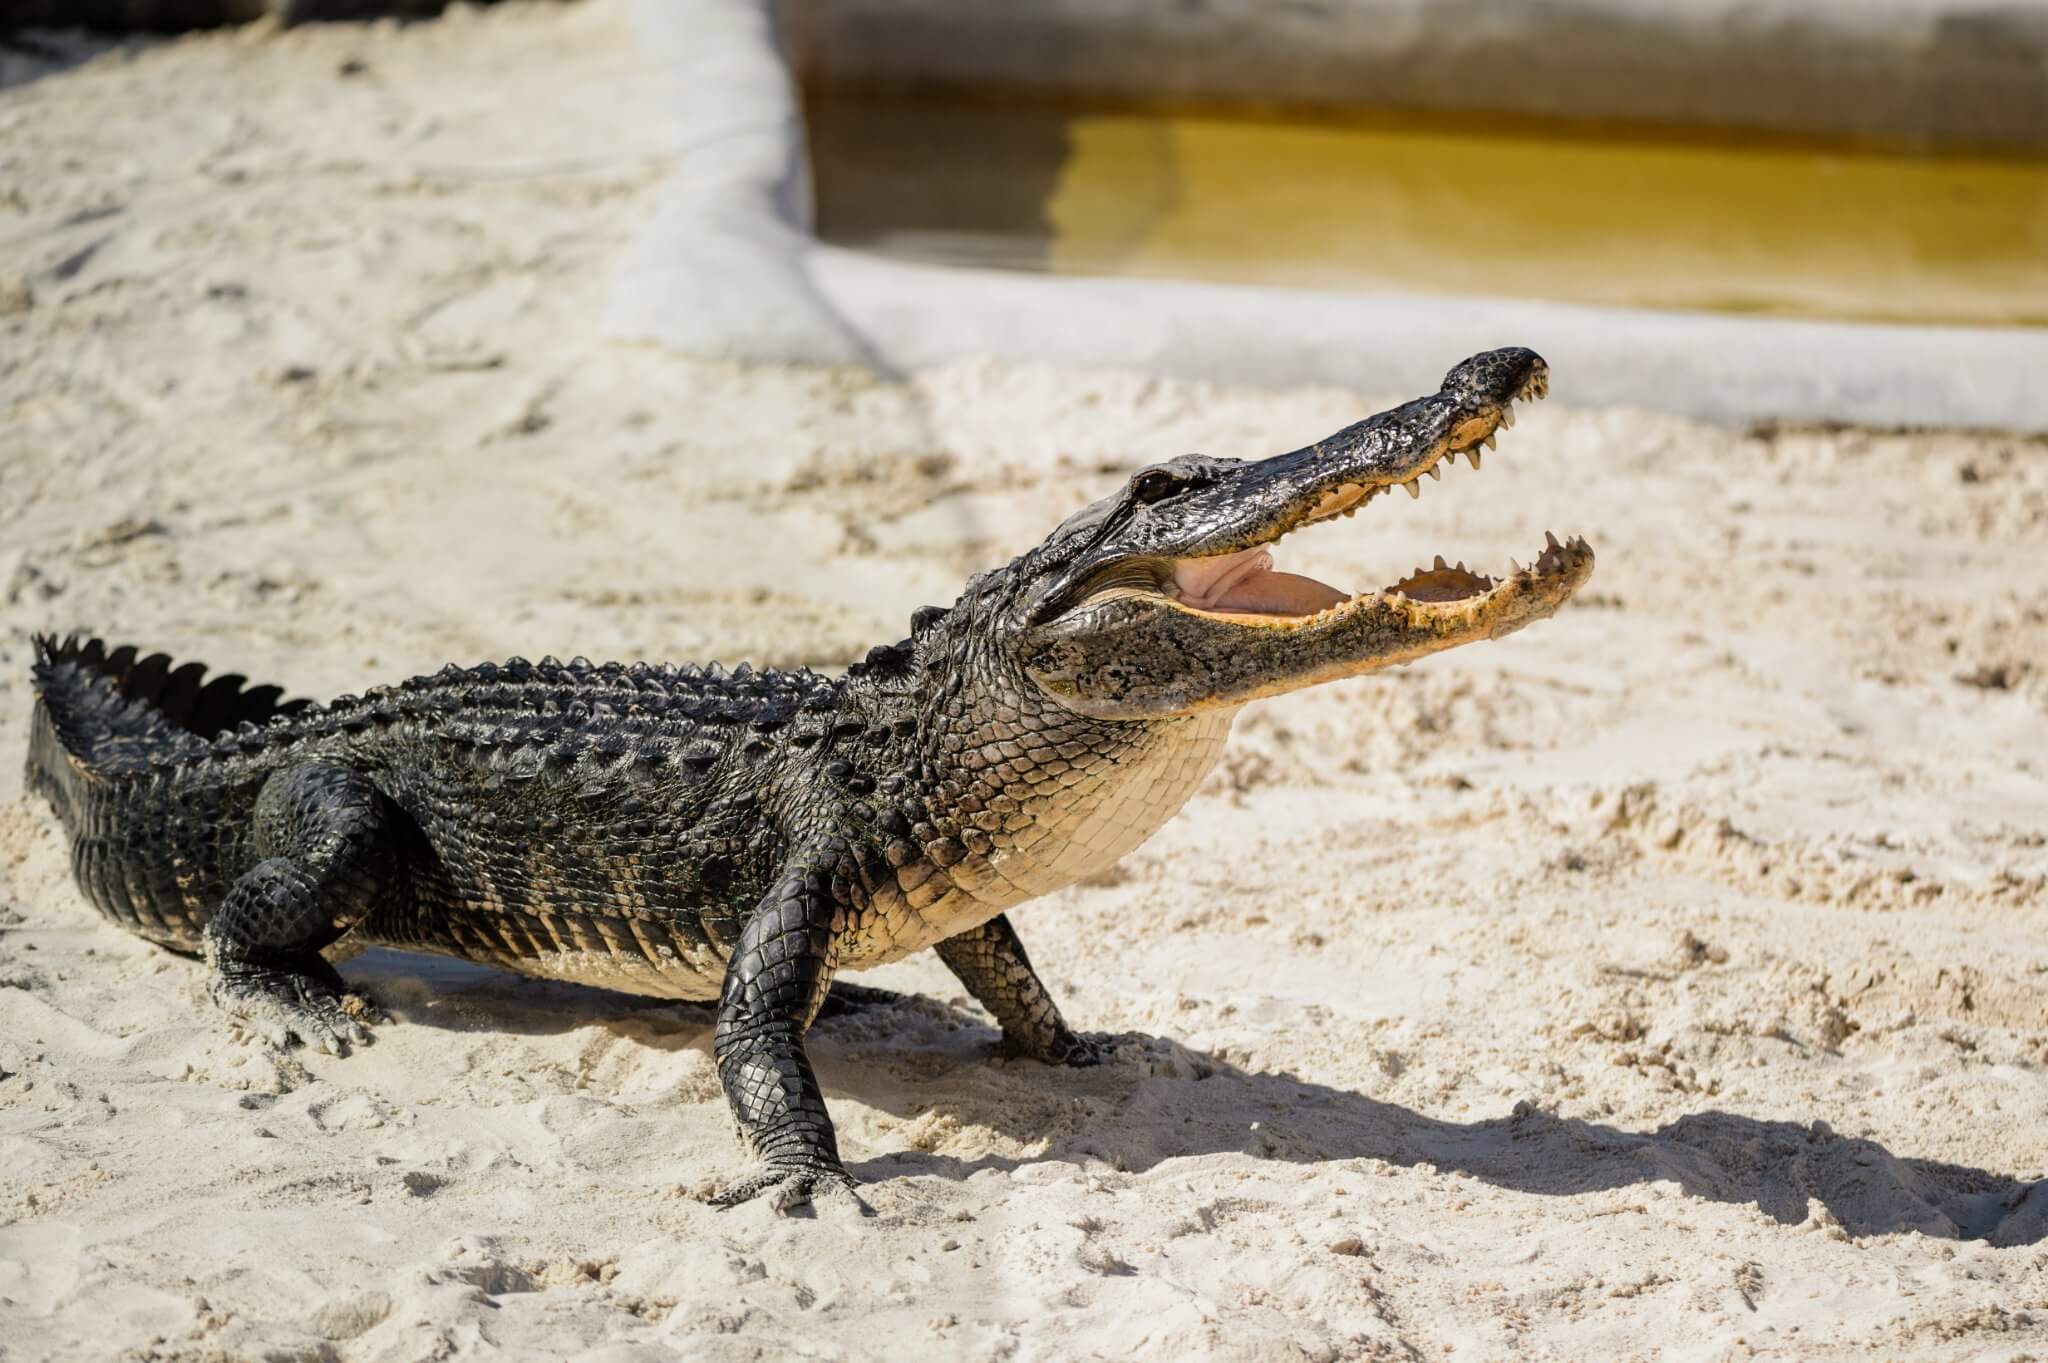 Alligator in a sand area
